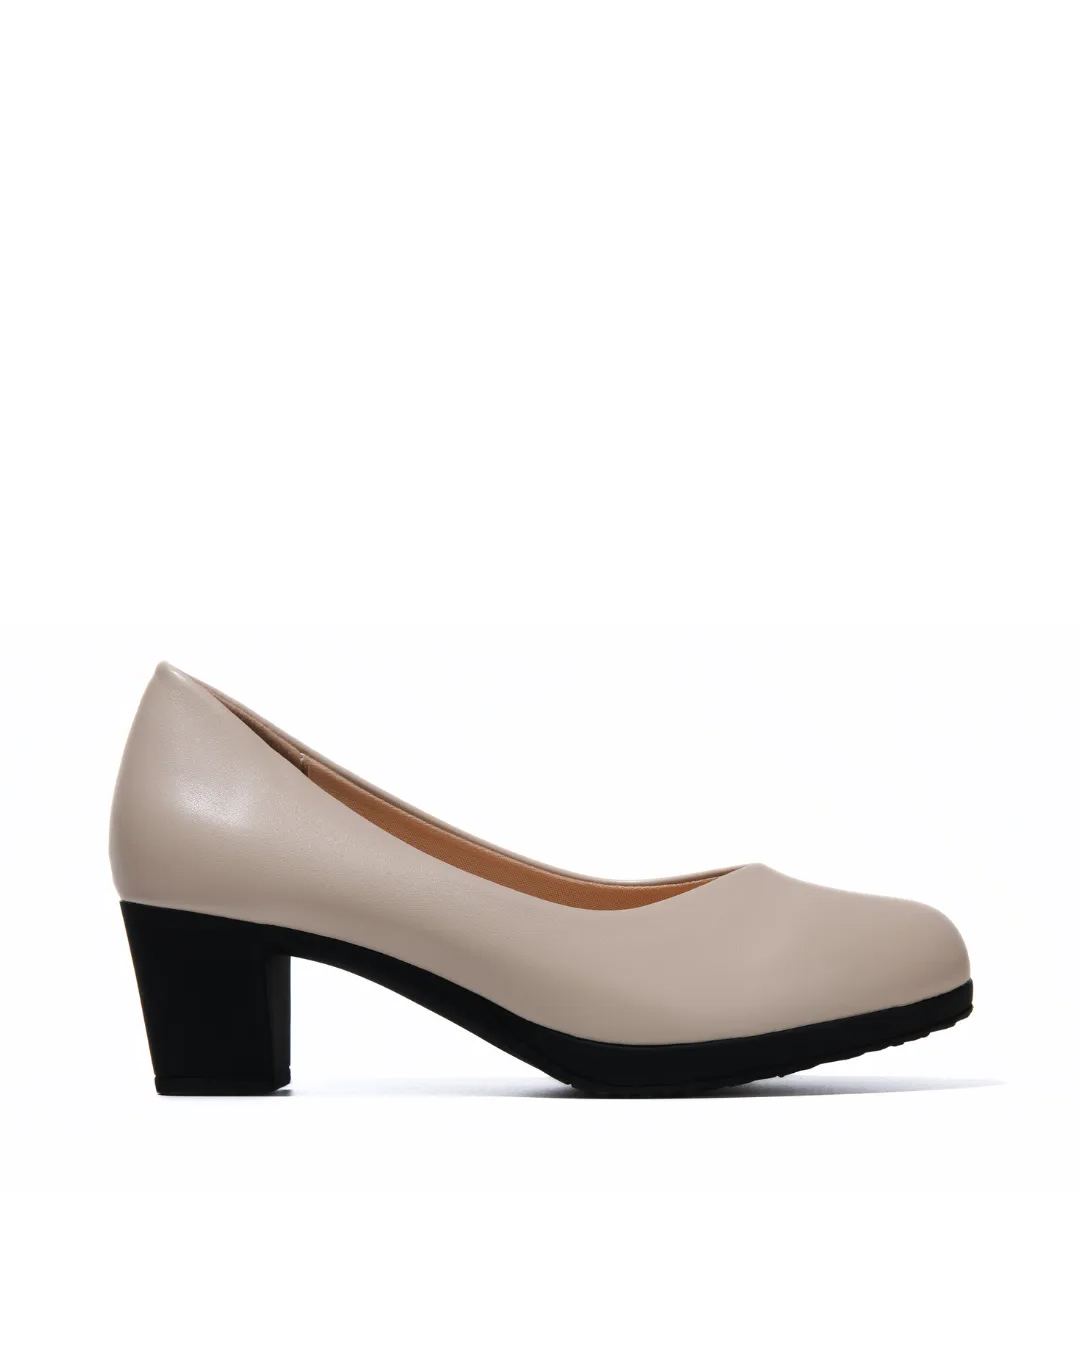 【NEW】Lyden Air-Cushioned Series 5.5cm High Heels - Beige